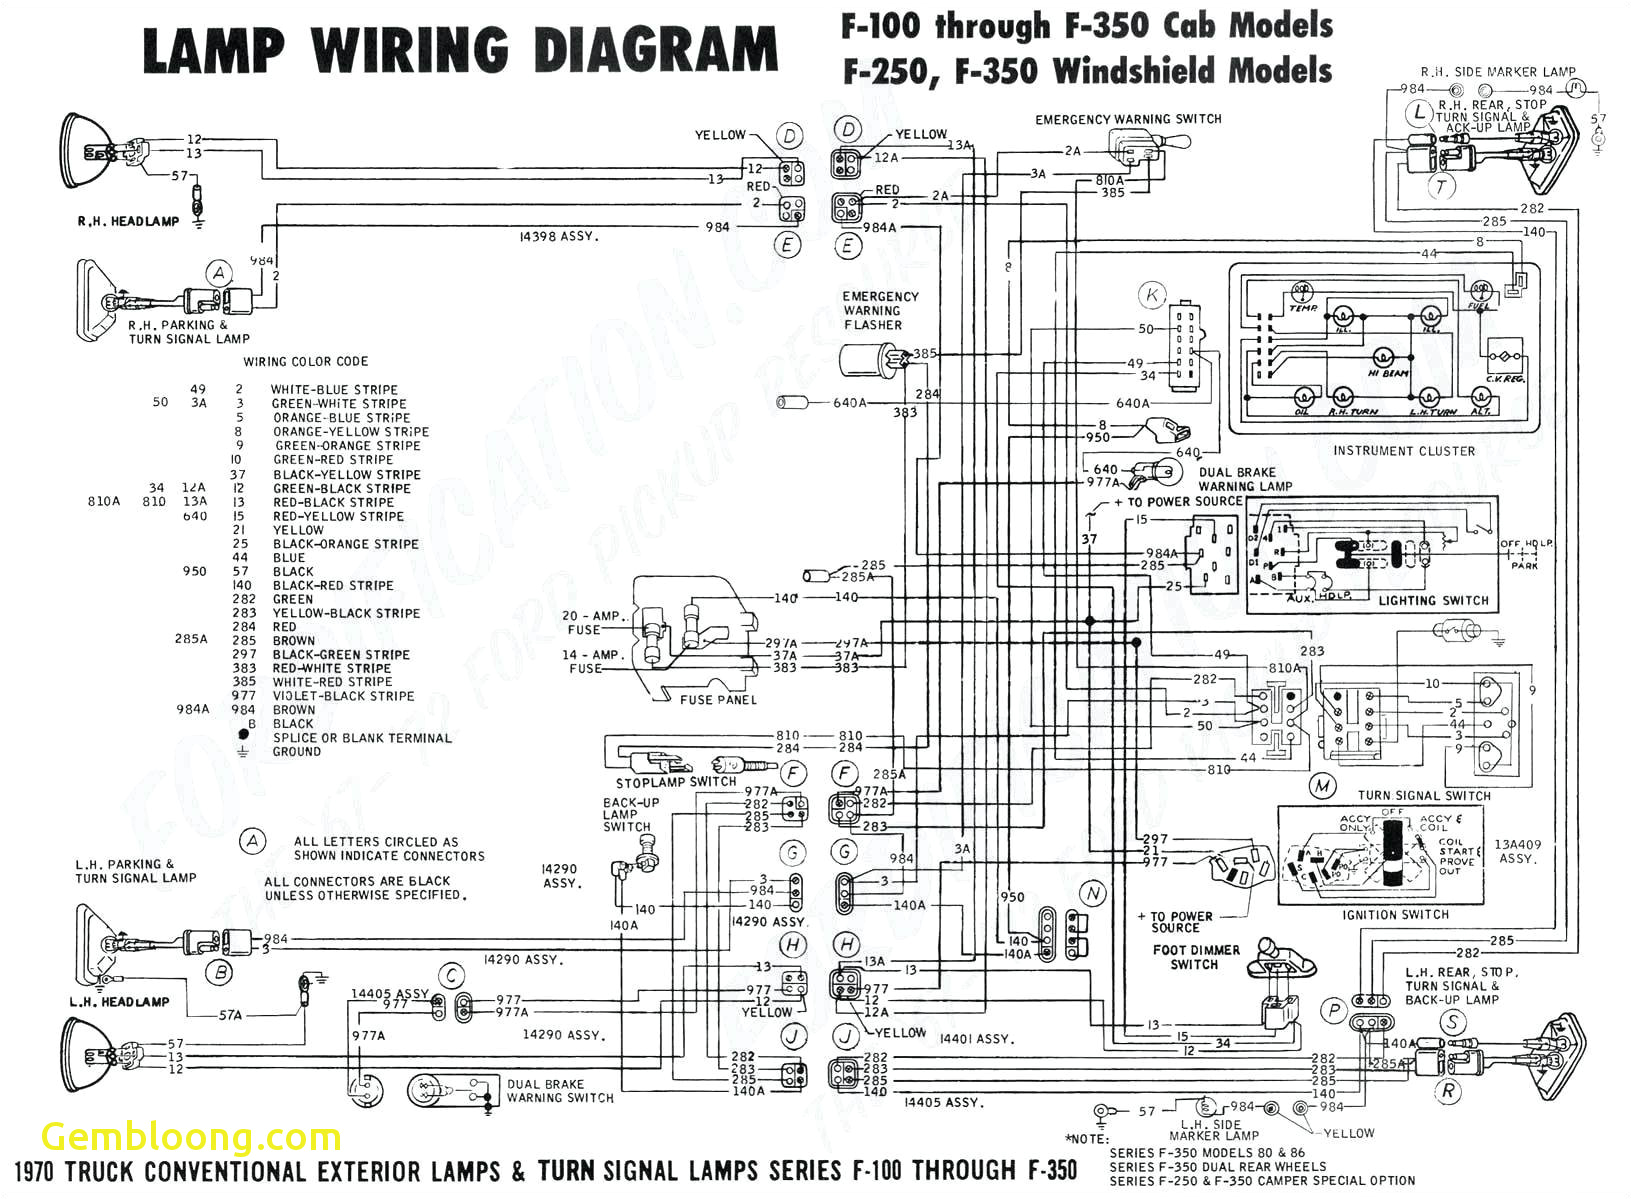 2003 Buick Century Headlight Wiring Diagram 2000 Buick Lesabre Wiring Diagram Model Wiring Diagram Center